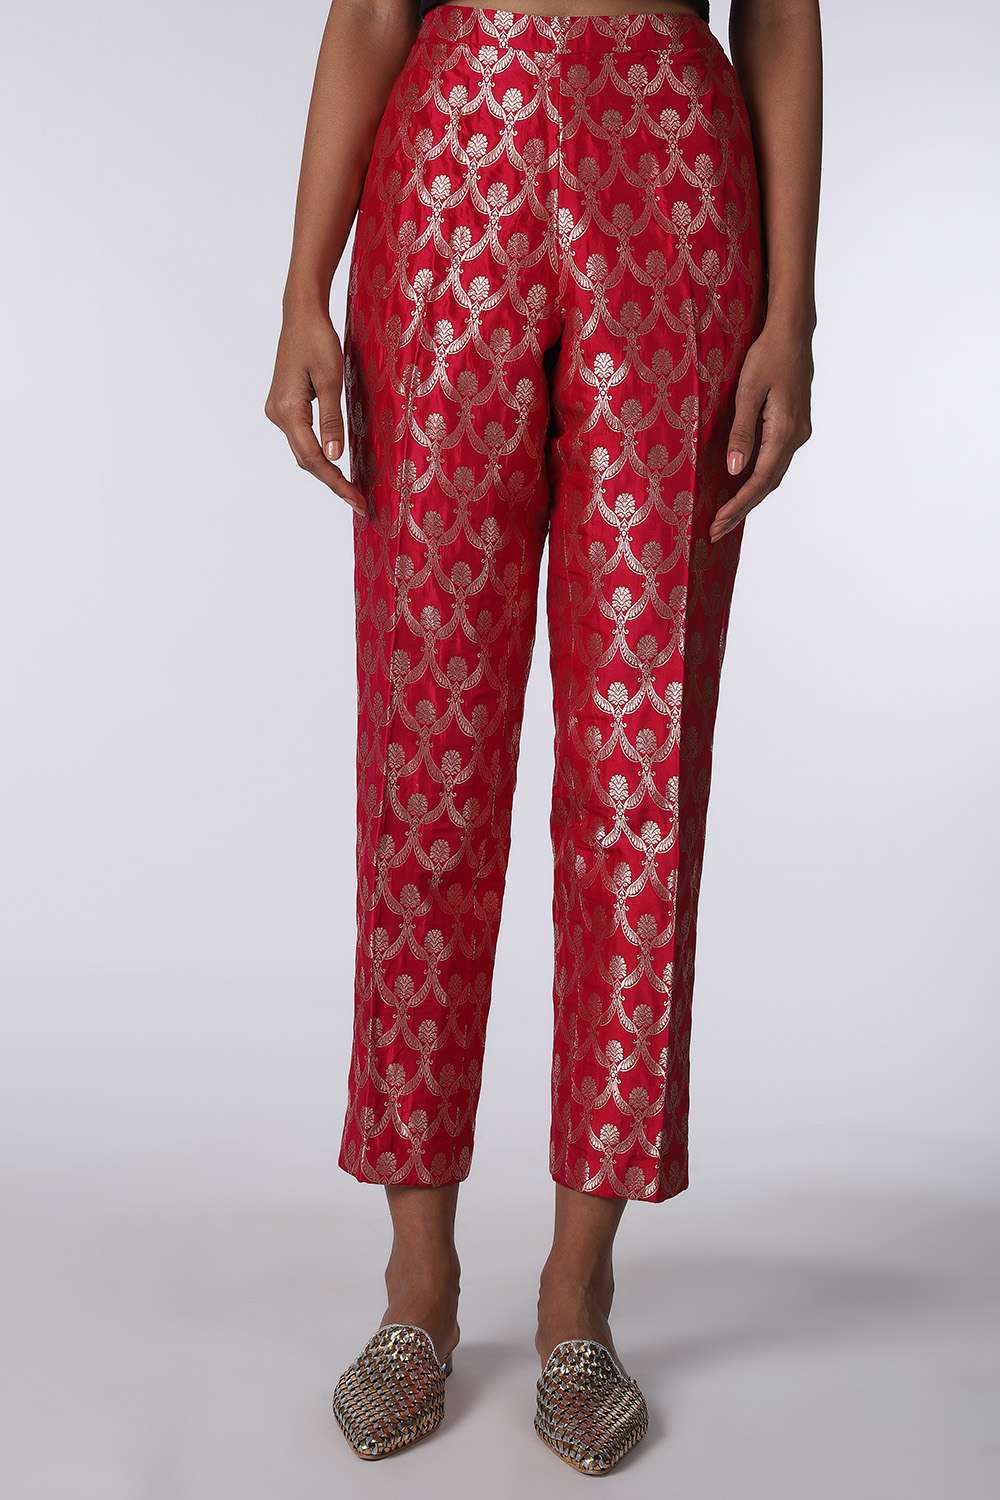 Buy Pink Brocade Chanderi Kurta with Pants Set of 2   VJ100MAR101KPREDVJ100MAR  The loom